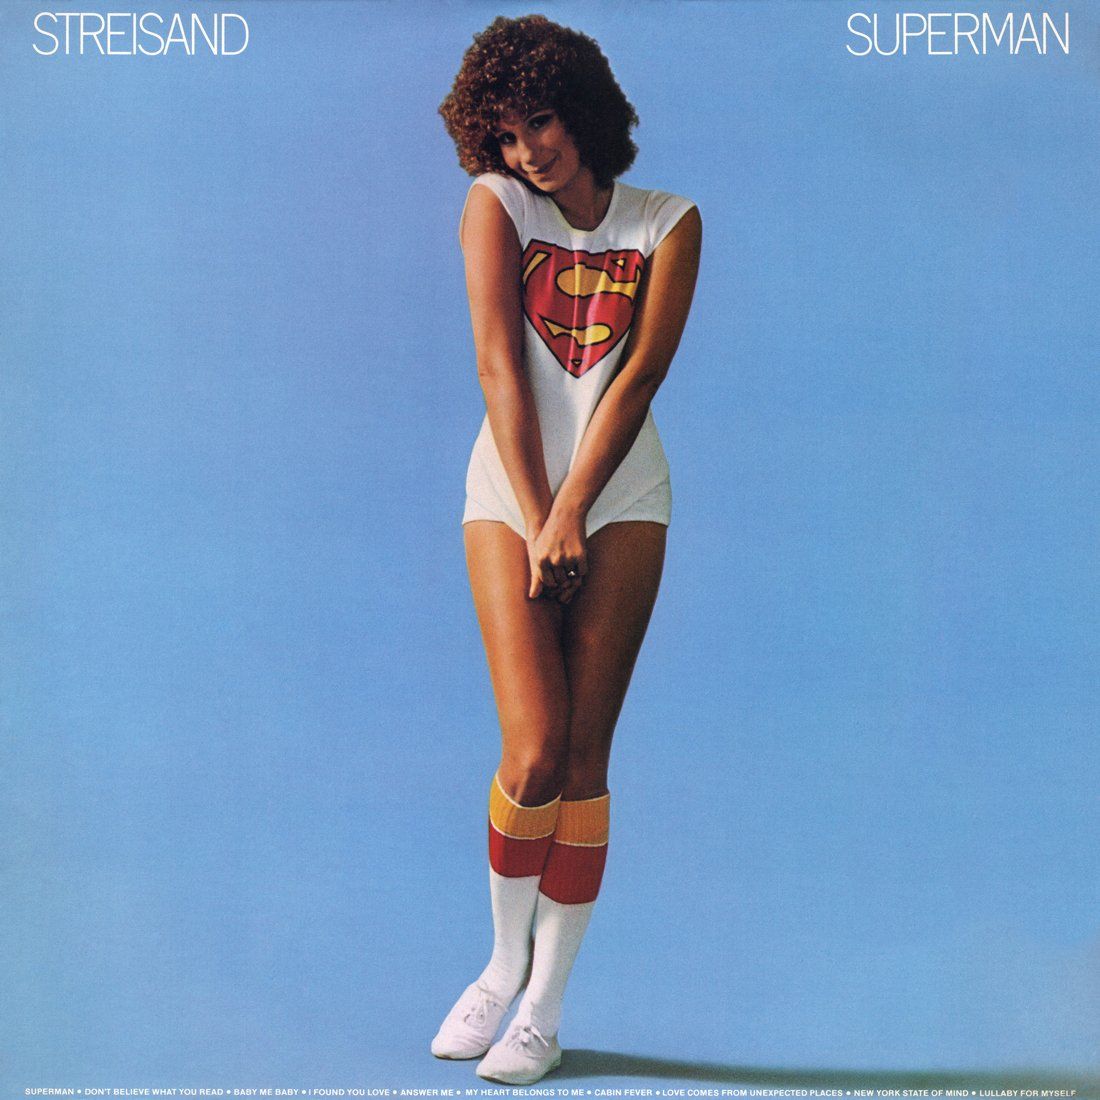 Superman original album cover. Scanned by Kevin Schlenker.